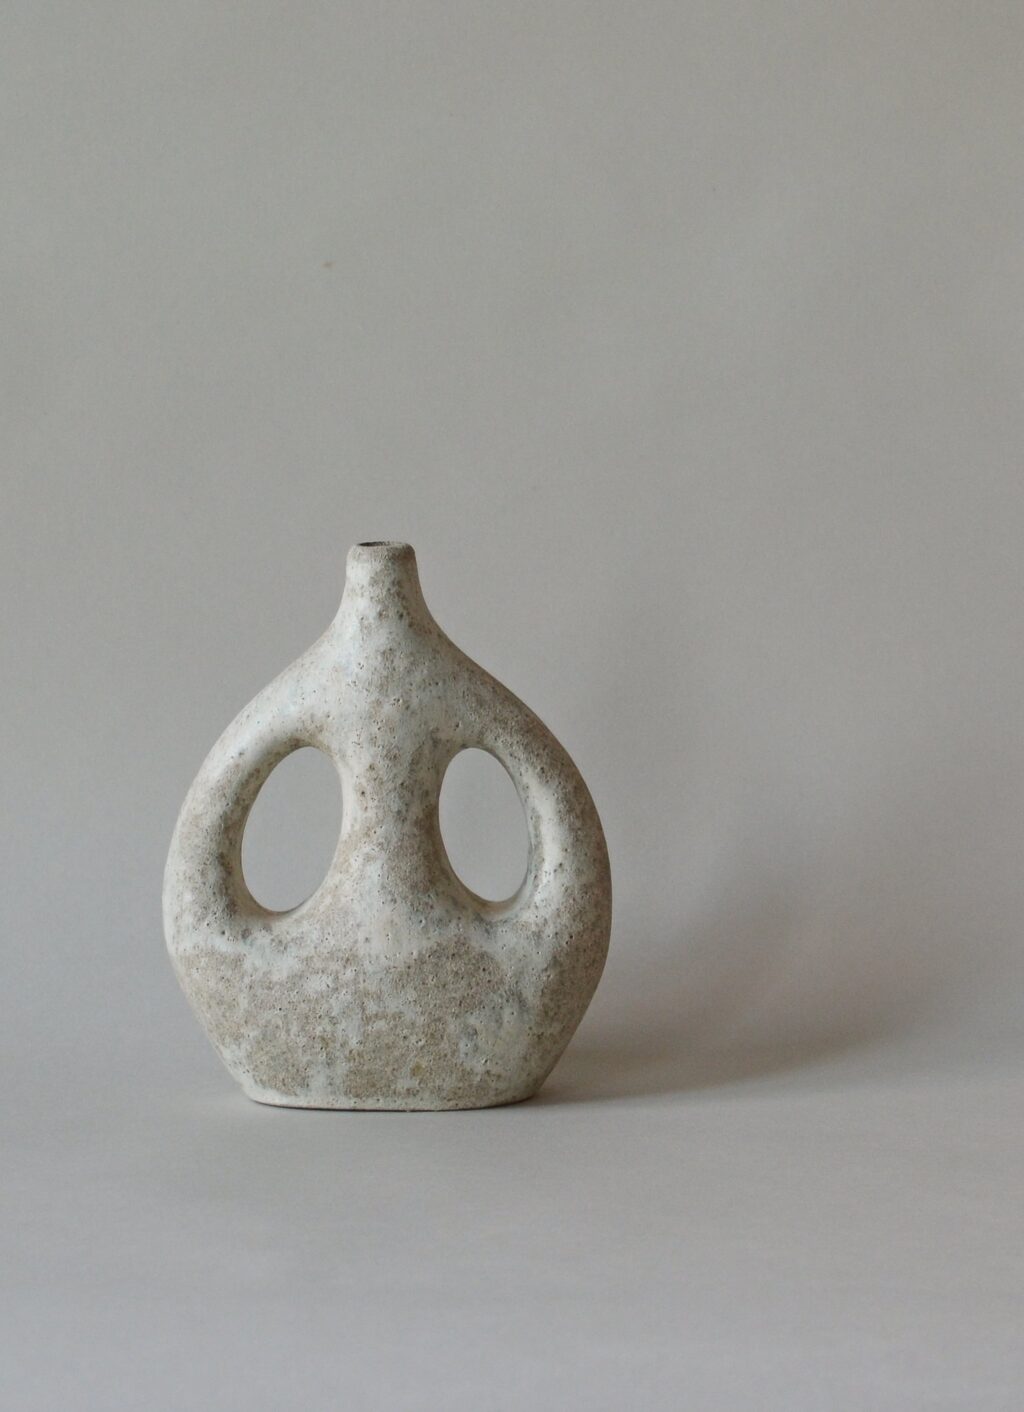 Viv Lee - Handmade stoneware vessel - Sympoiesis V - Medium stone